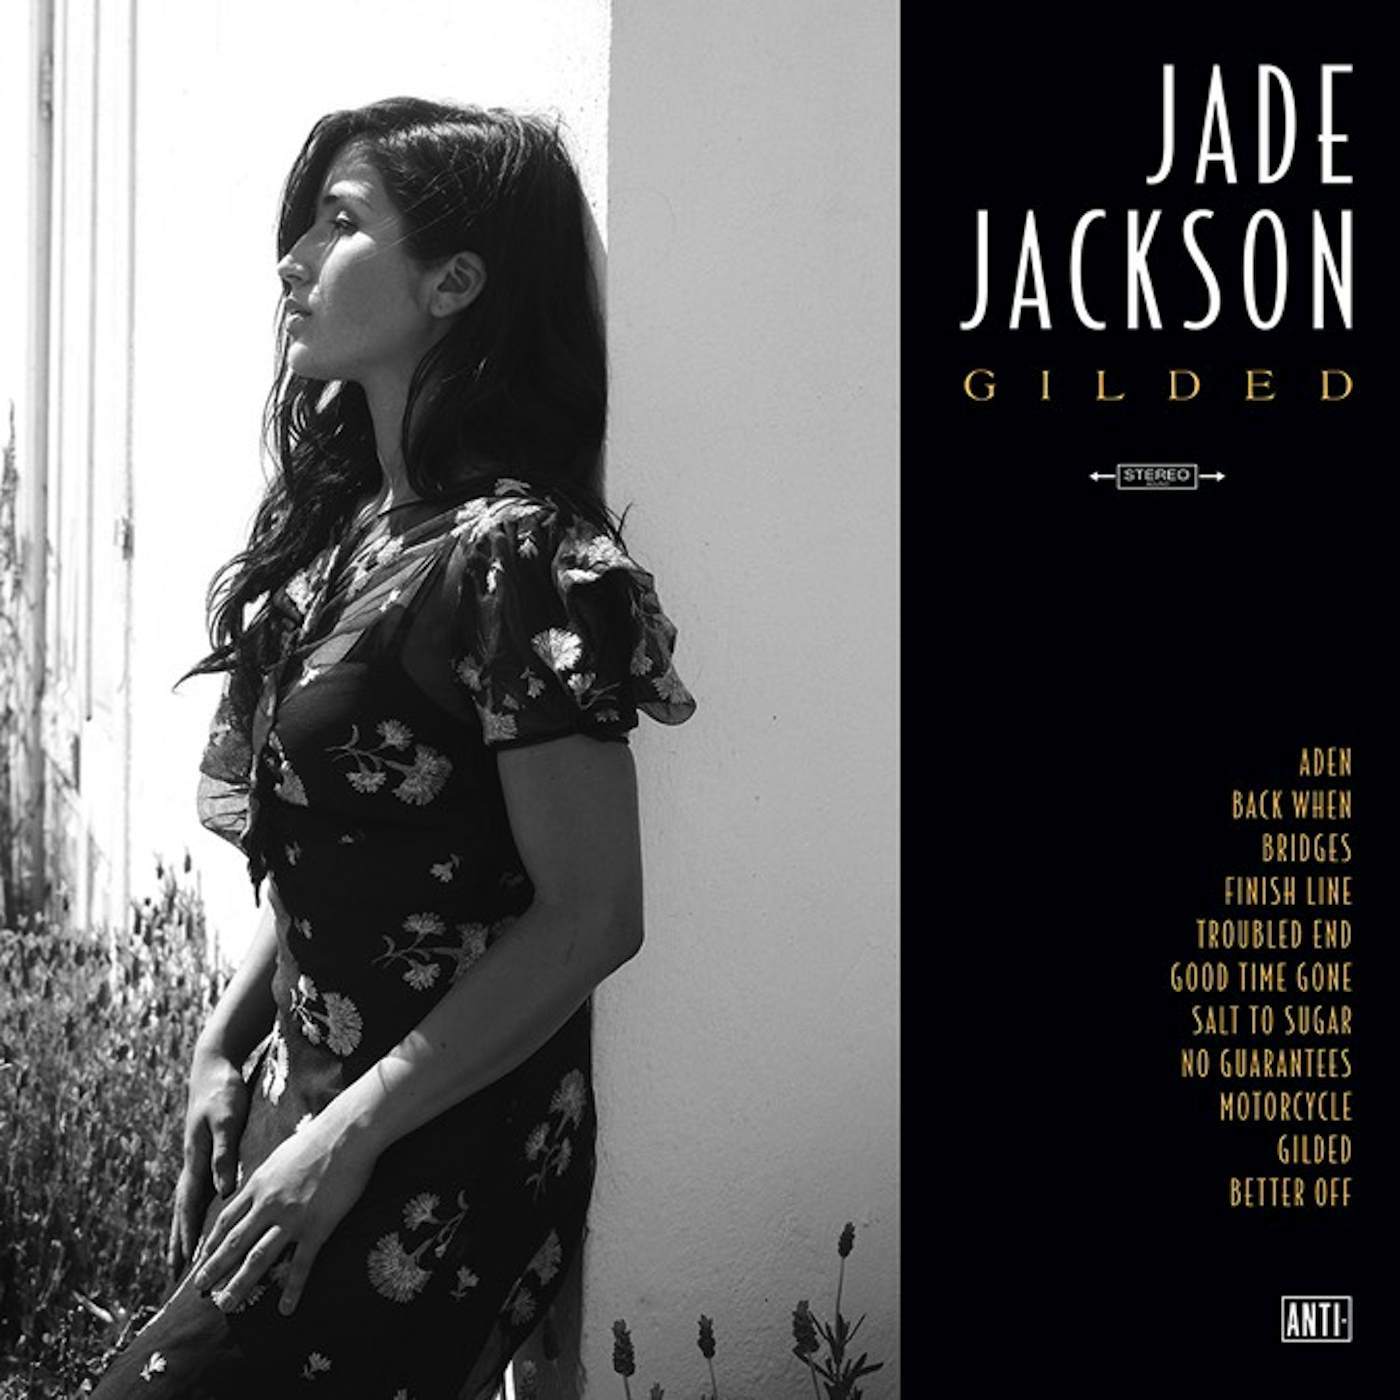 Jade Jackson Gilded Vinyl Record